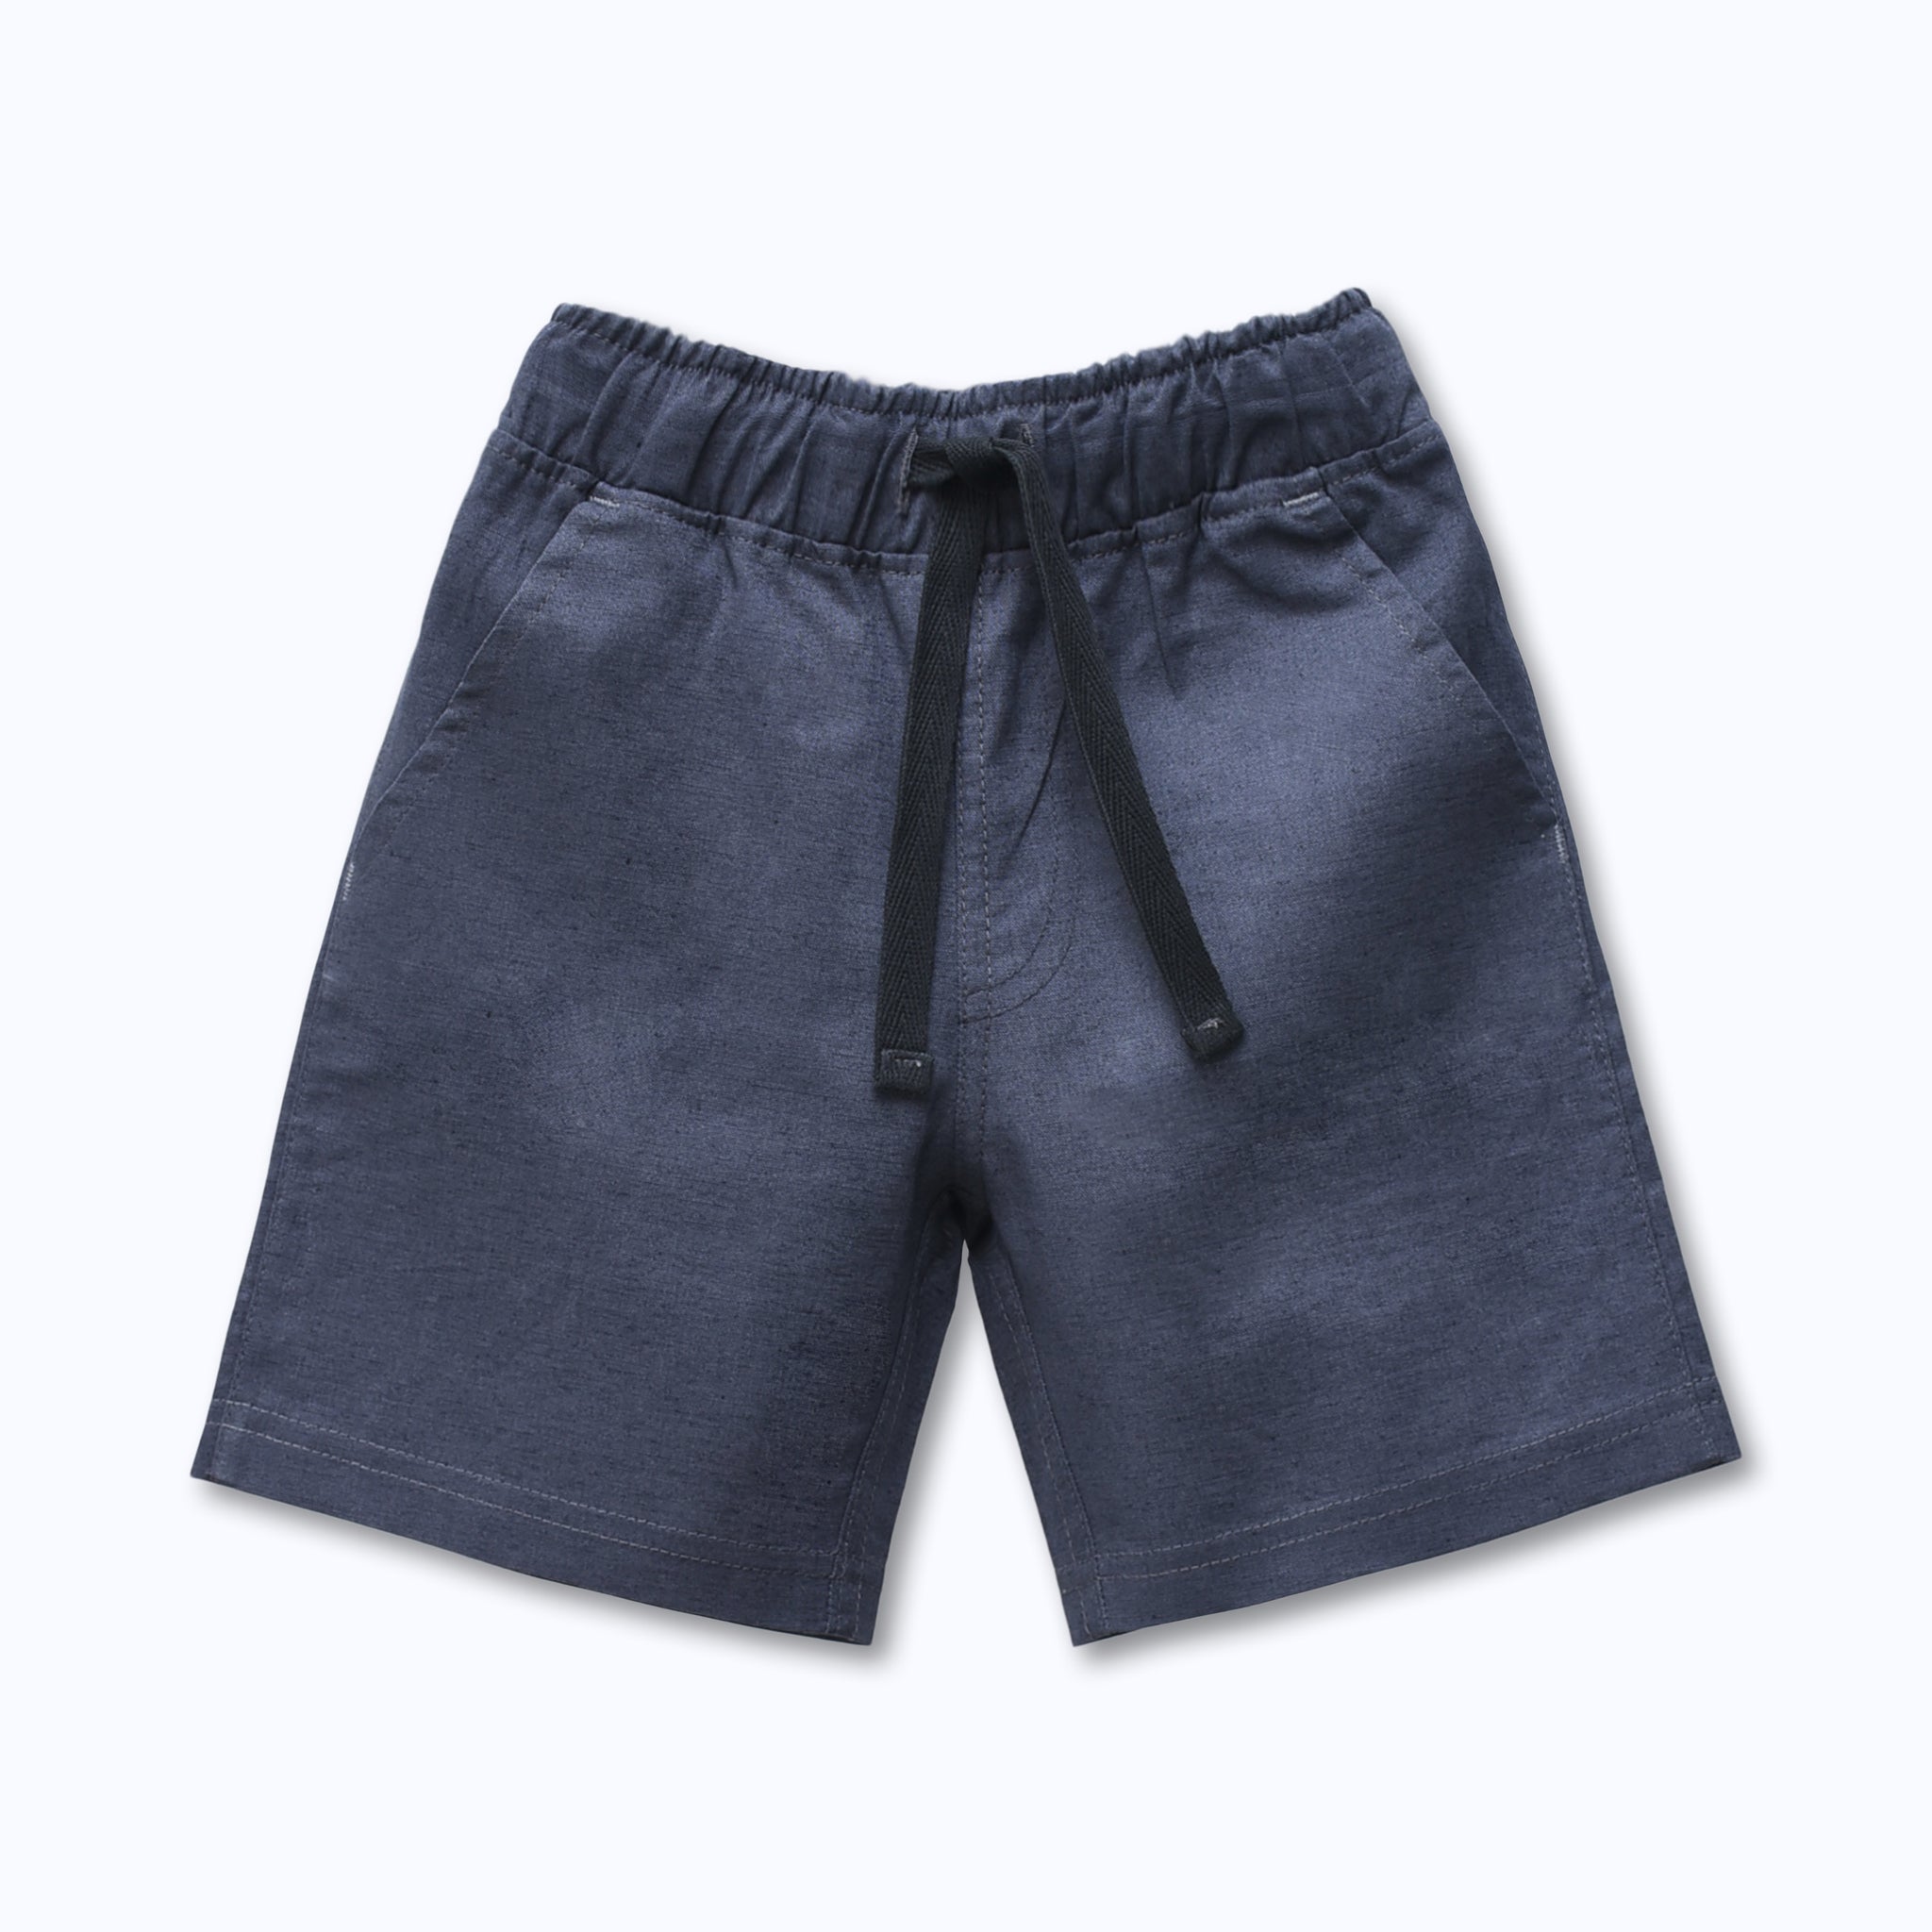 Woven Pull-on Shorts (Dark Grey)